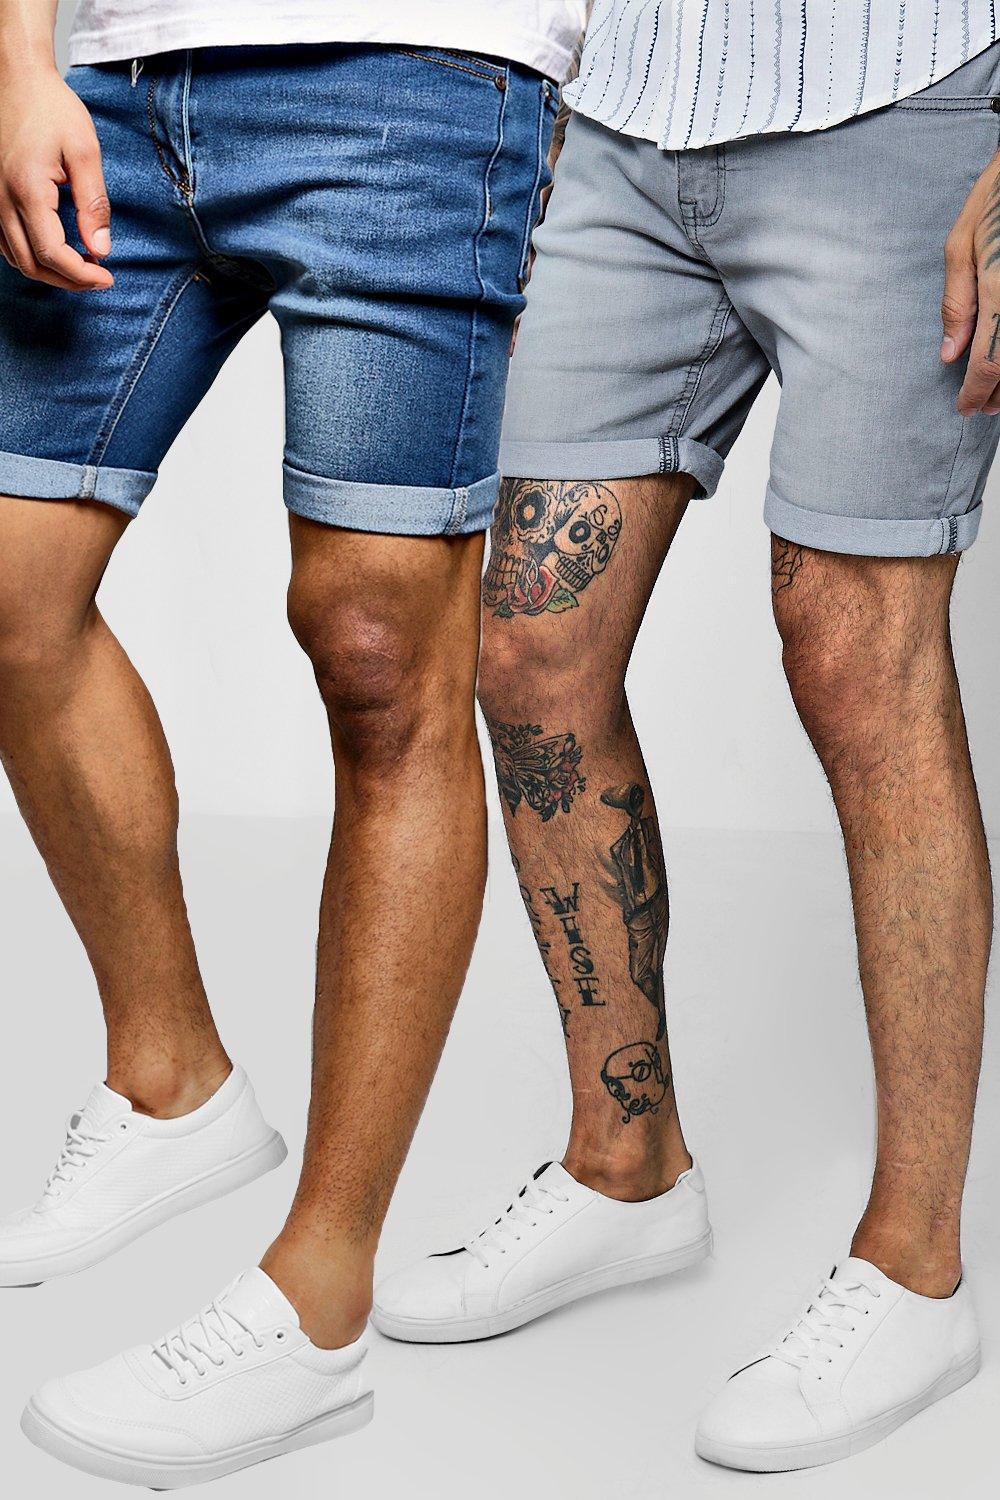 skinny jean shorts